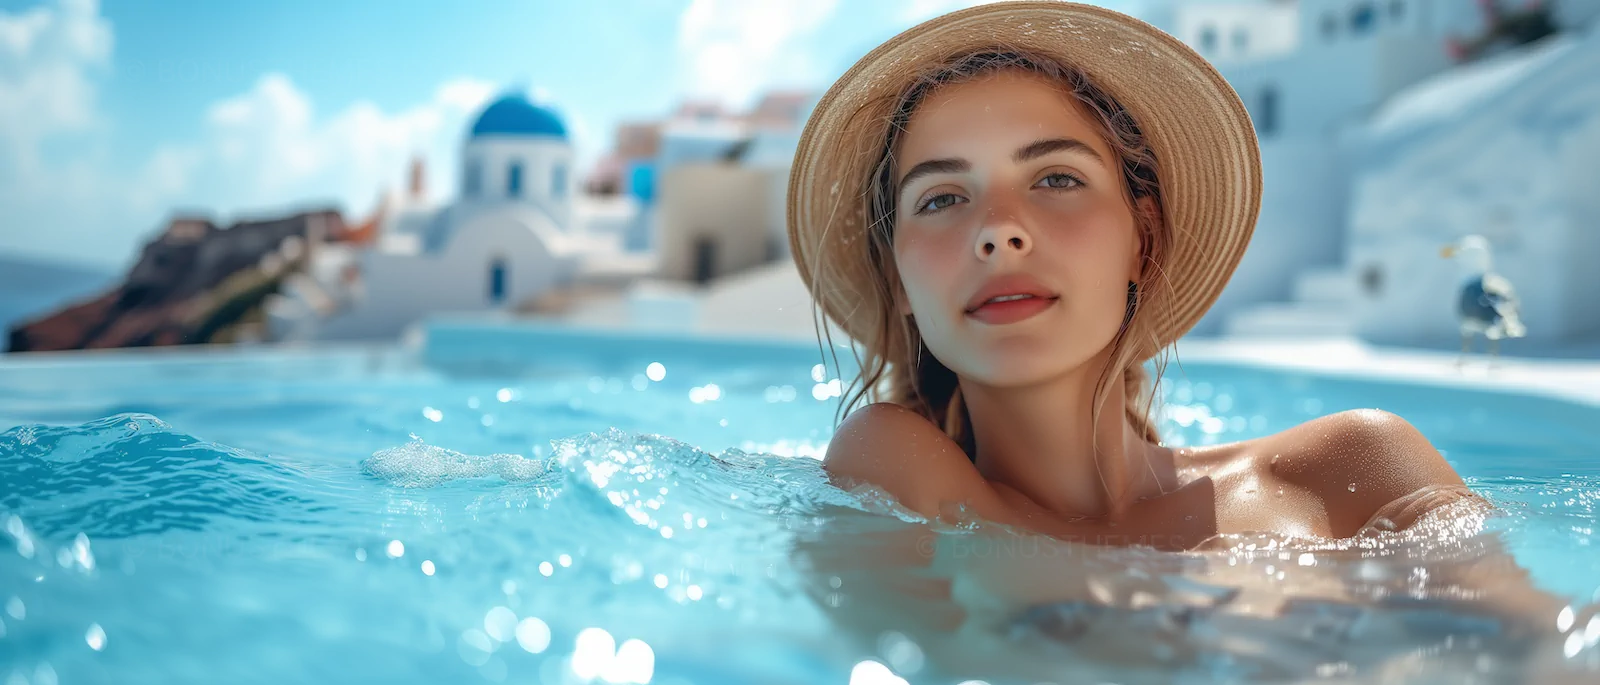 Santorini serenity, woman swimming poolside